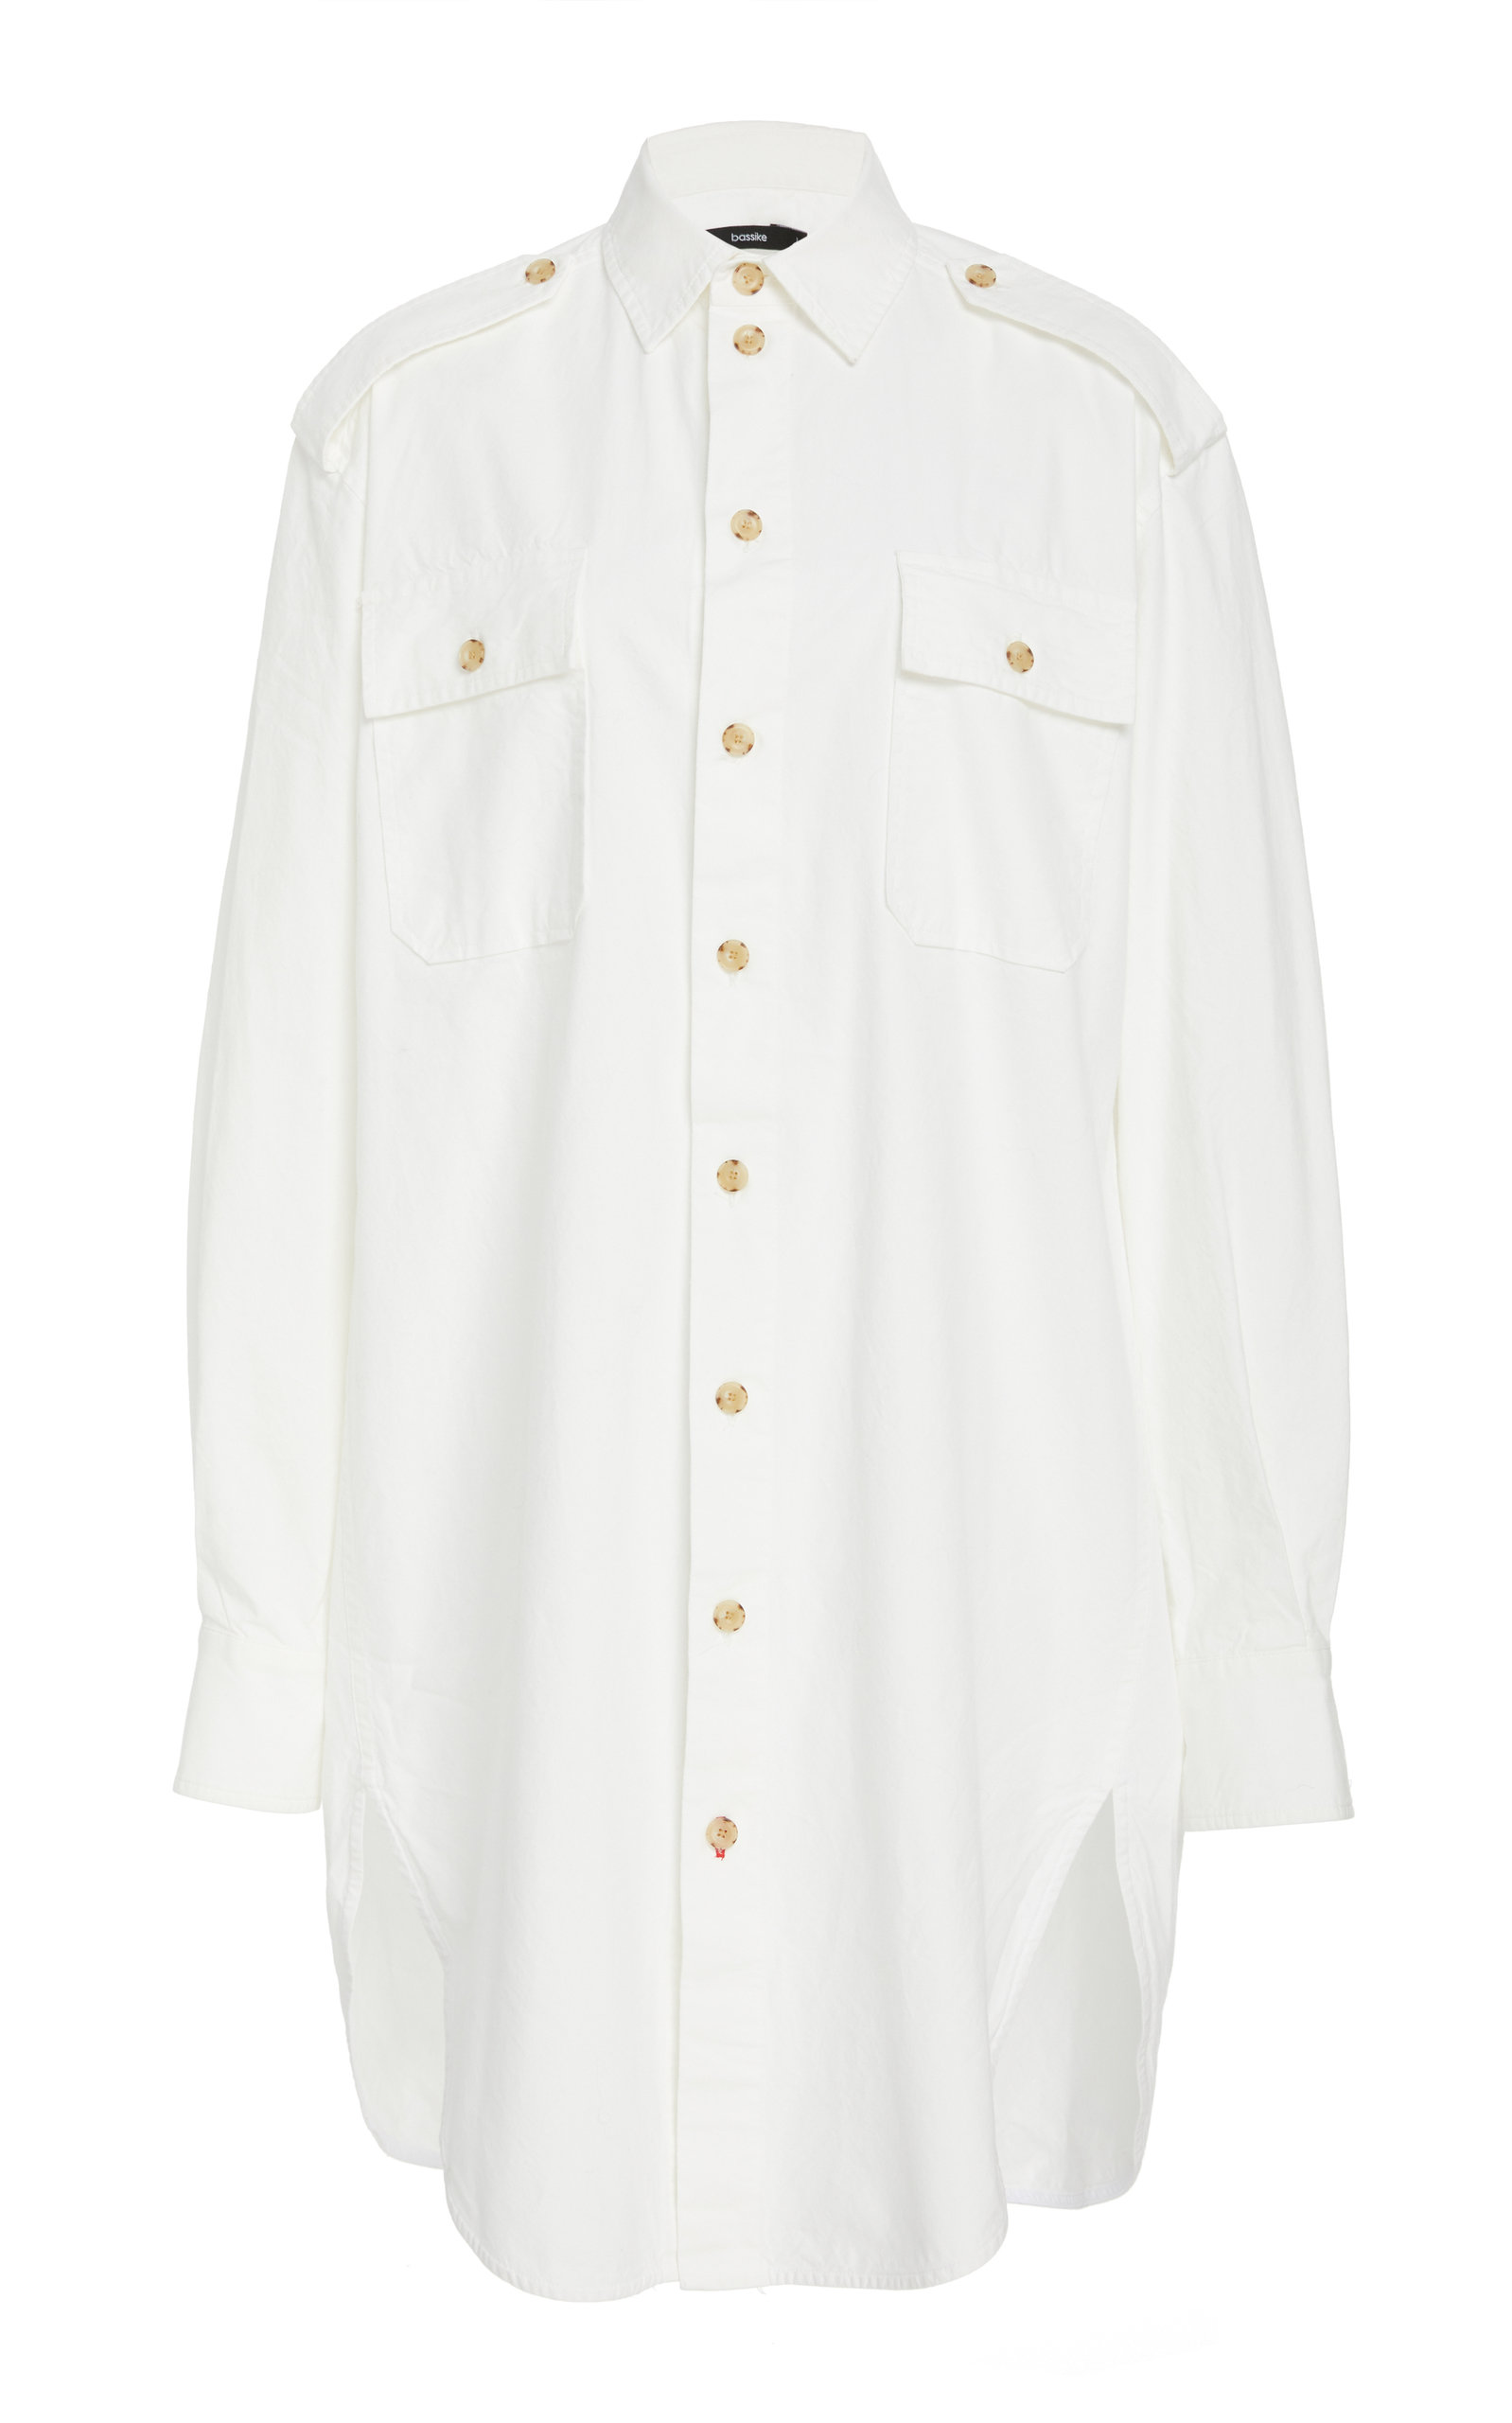 white utility shirt dress